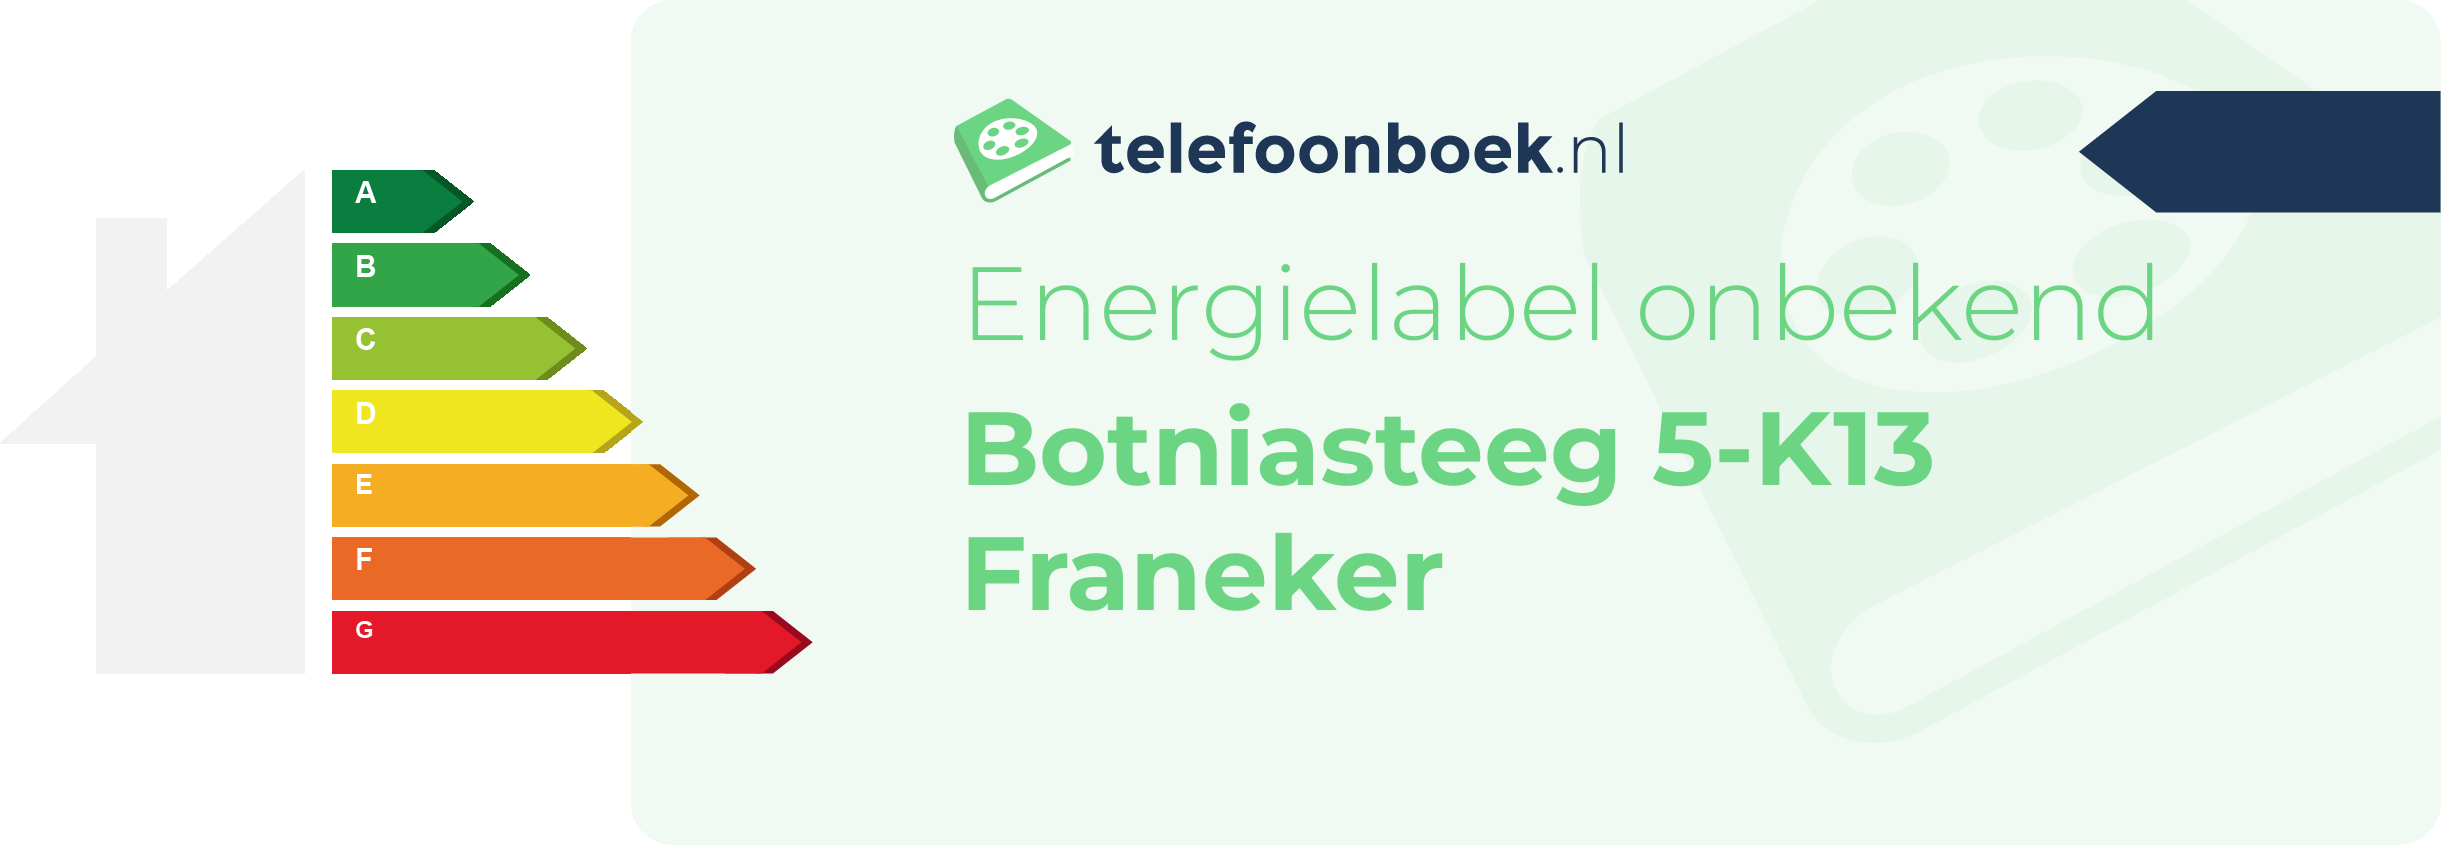 Energielabel Botniasteeg 5-K13 Franeker